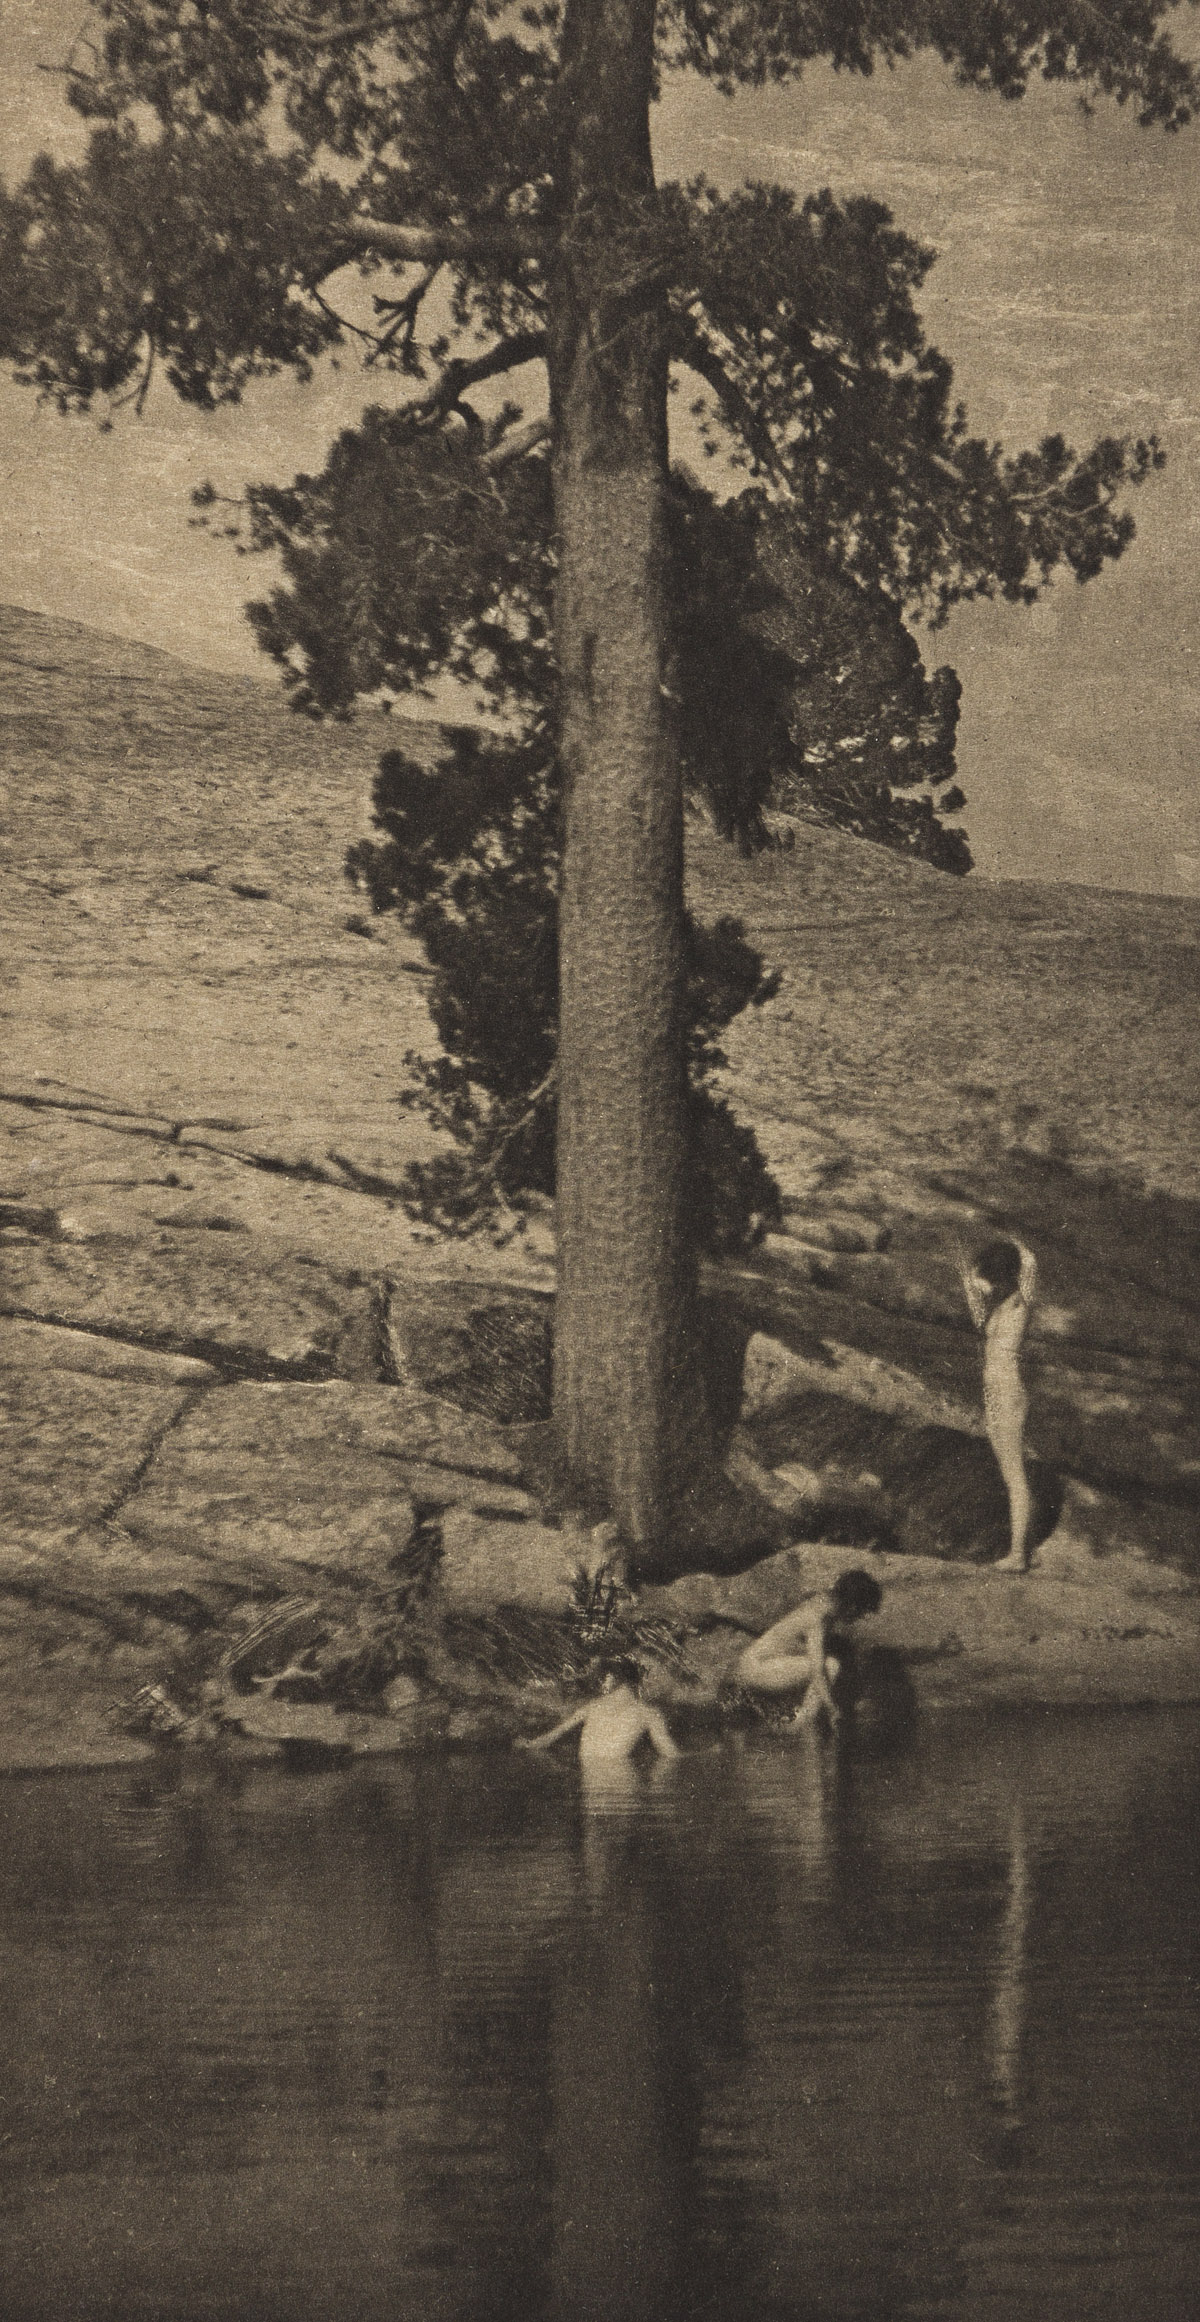 ANNE BRIGMAN (1869-1950) The Brook * Dawn * The Pool * Dryads (2).